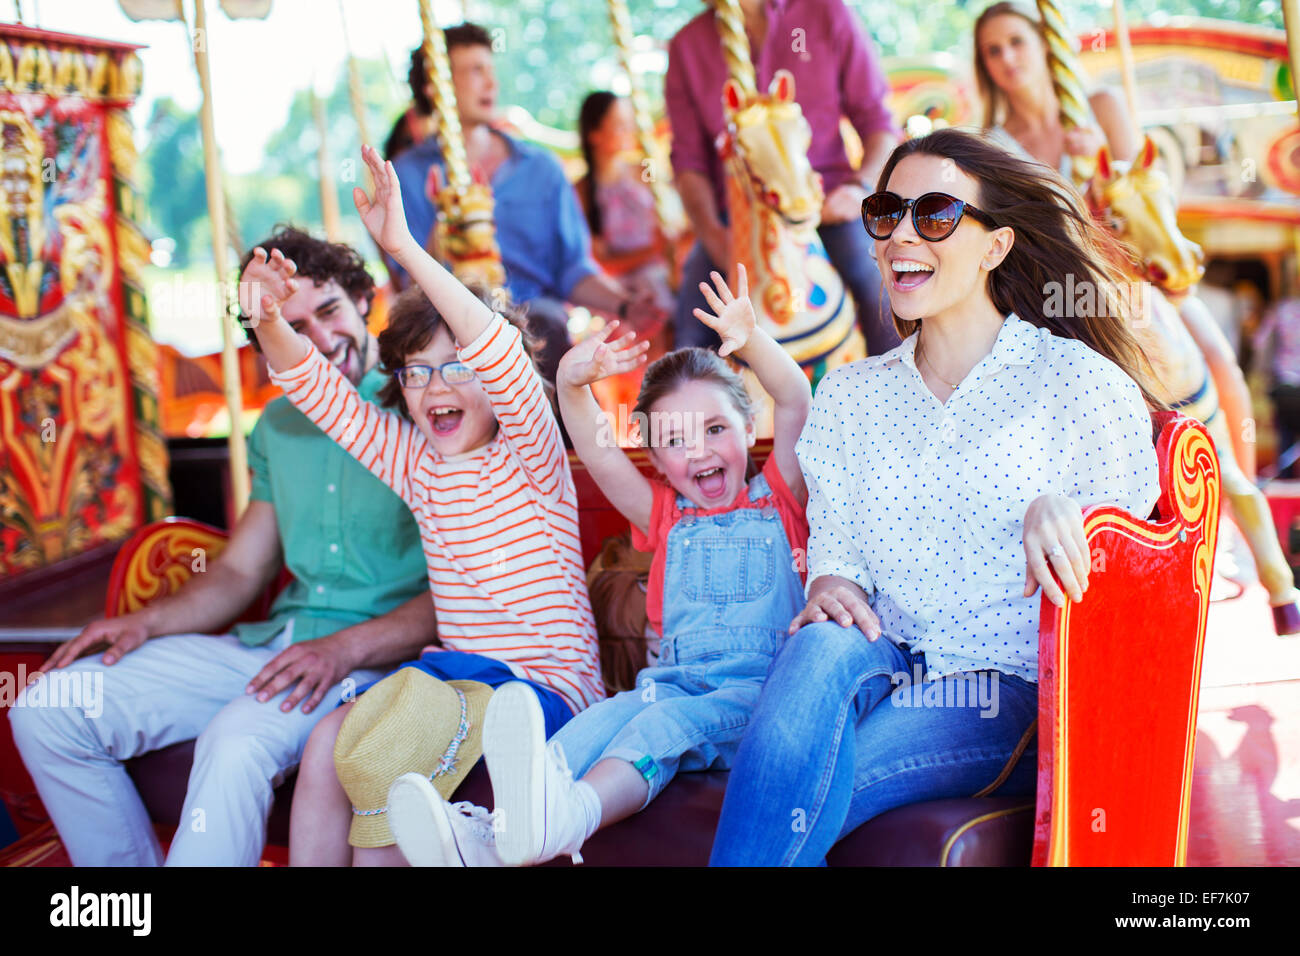 Family on carousel in amusement park Stock Photo